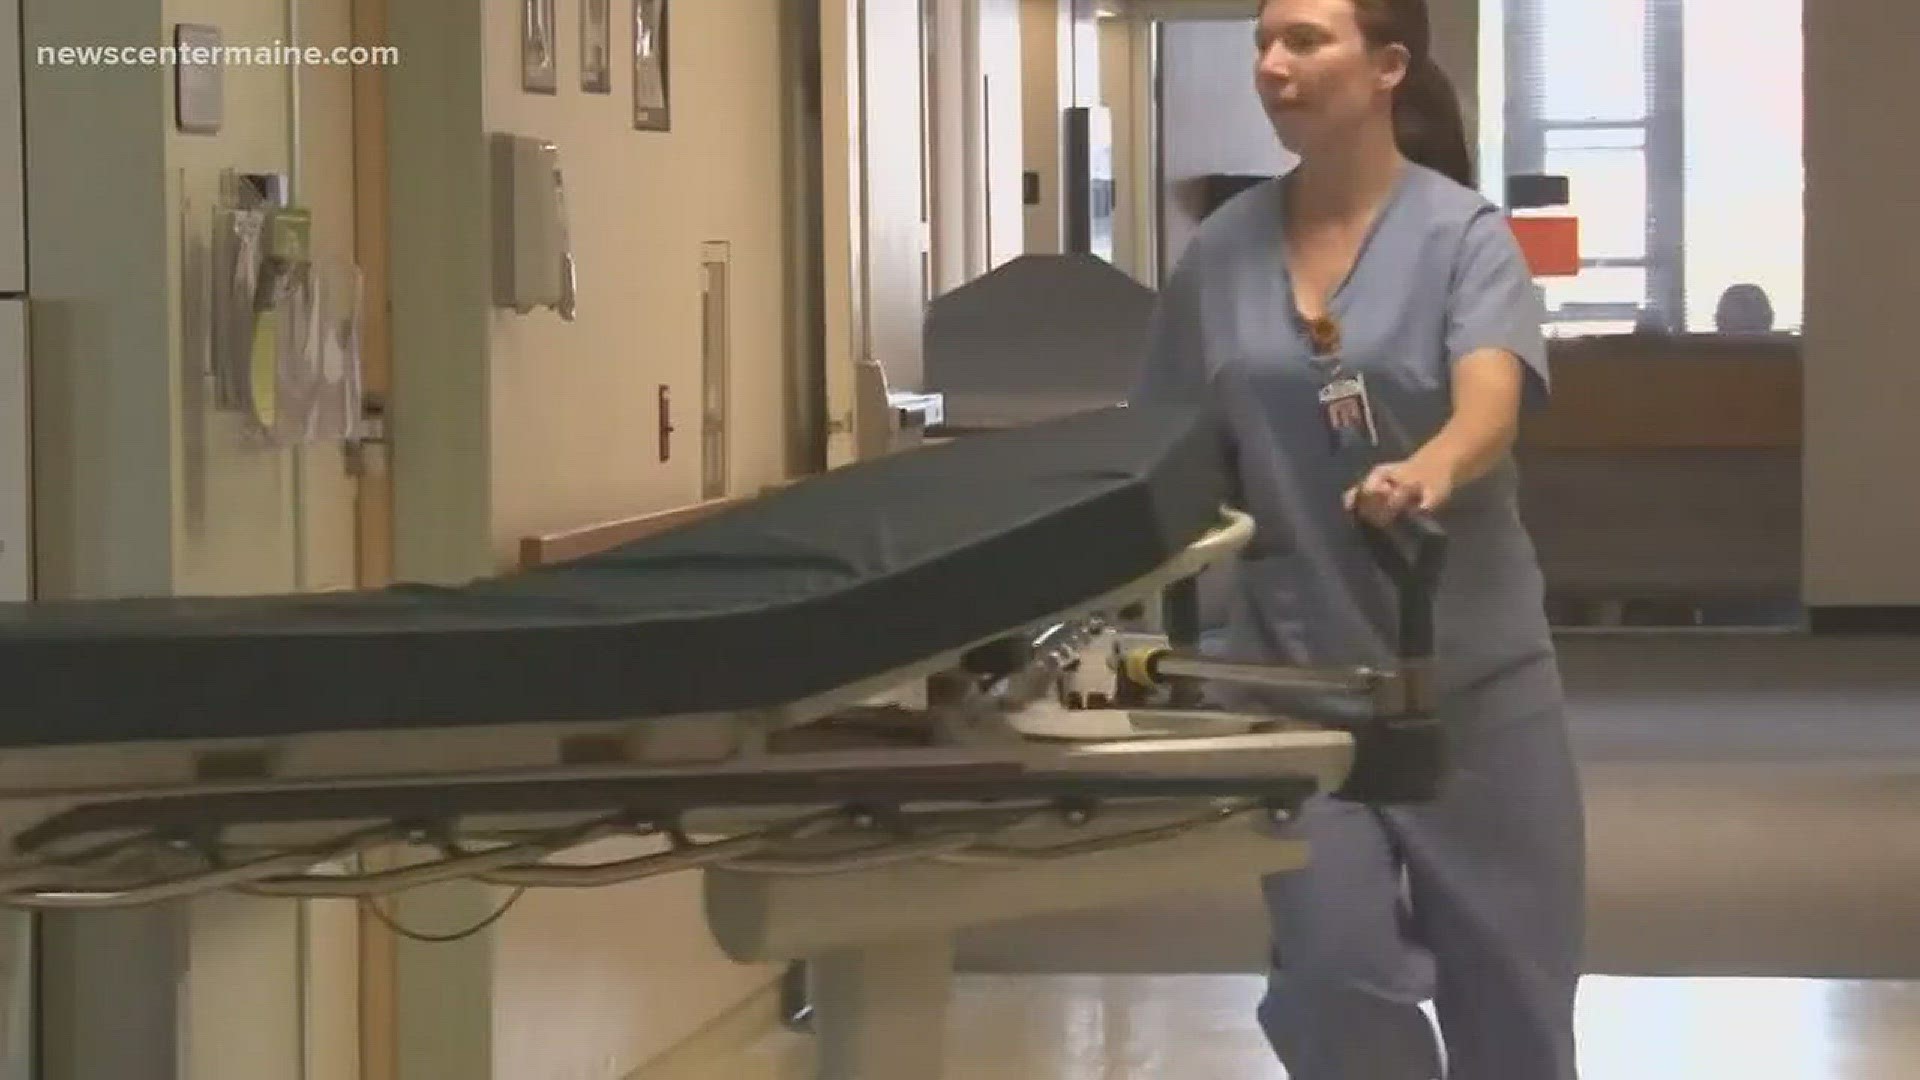 Maine facing shortage of nurses